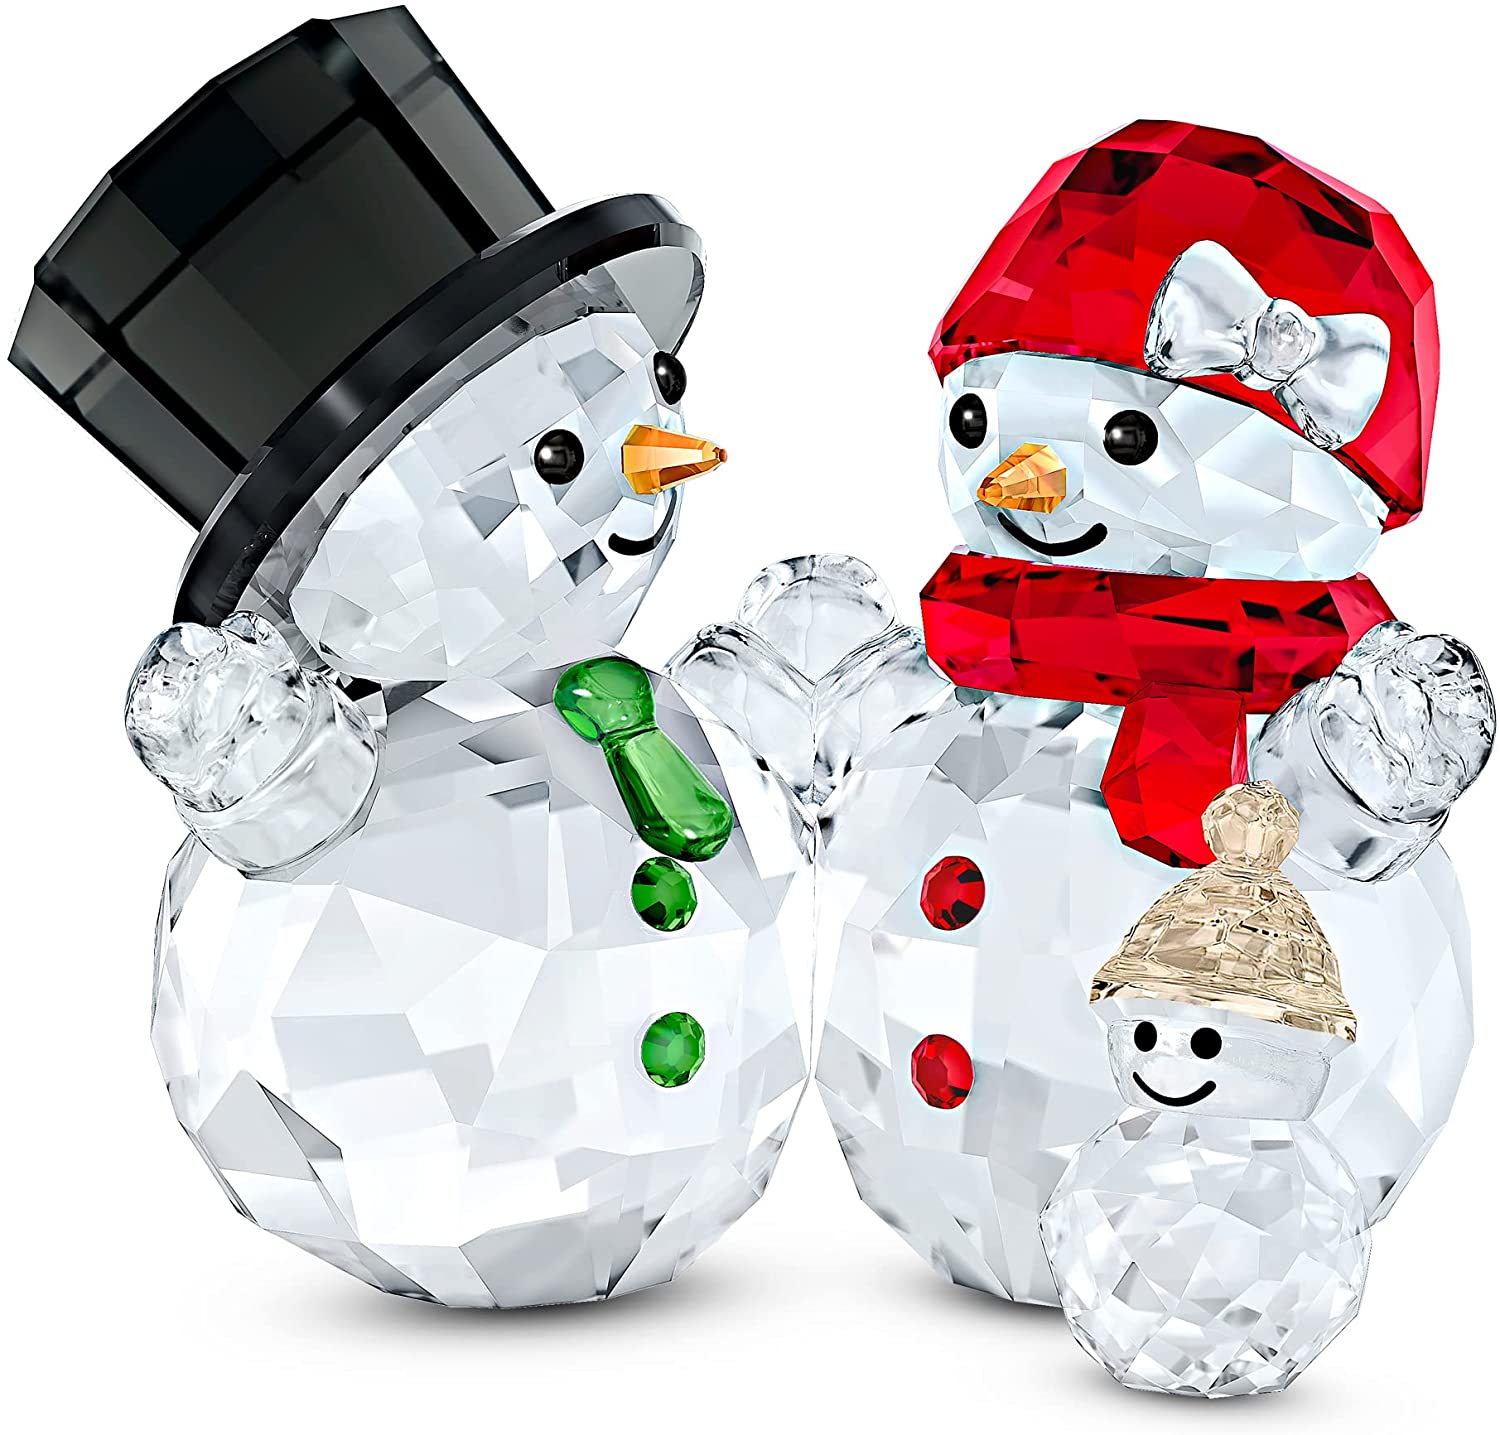 Swarovski Snowman Family Christmas Decoration with Radiant Swarovski Crystals